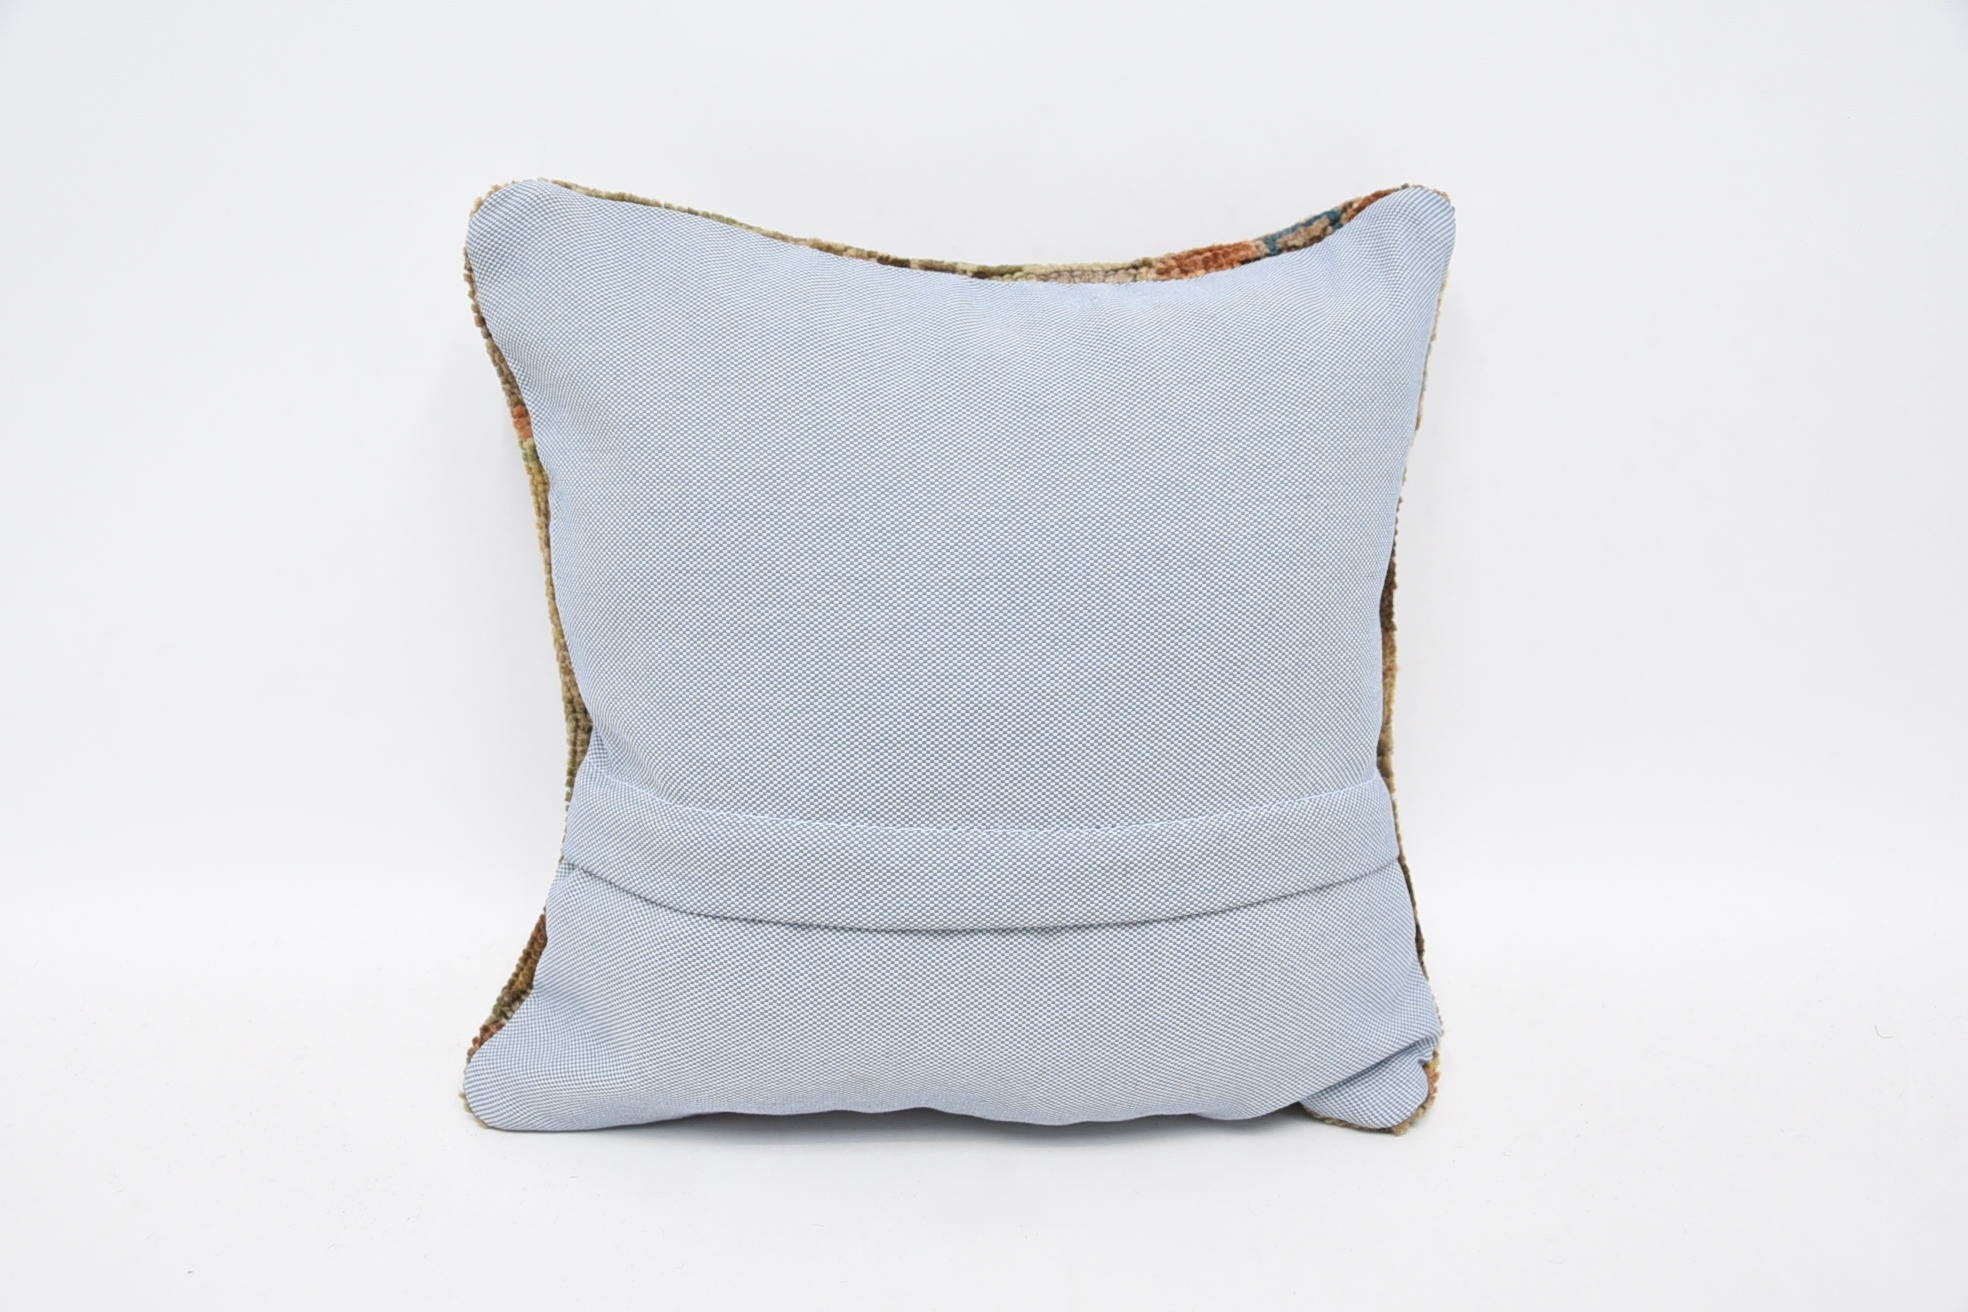 Kilim Pillow, Vintage Pillow, 12"x12" Brown Pillow, Bench Cushion, Handwoven Pillow Cover Cushion Case, Boho Pillow Sham Cover